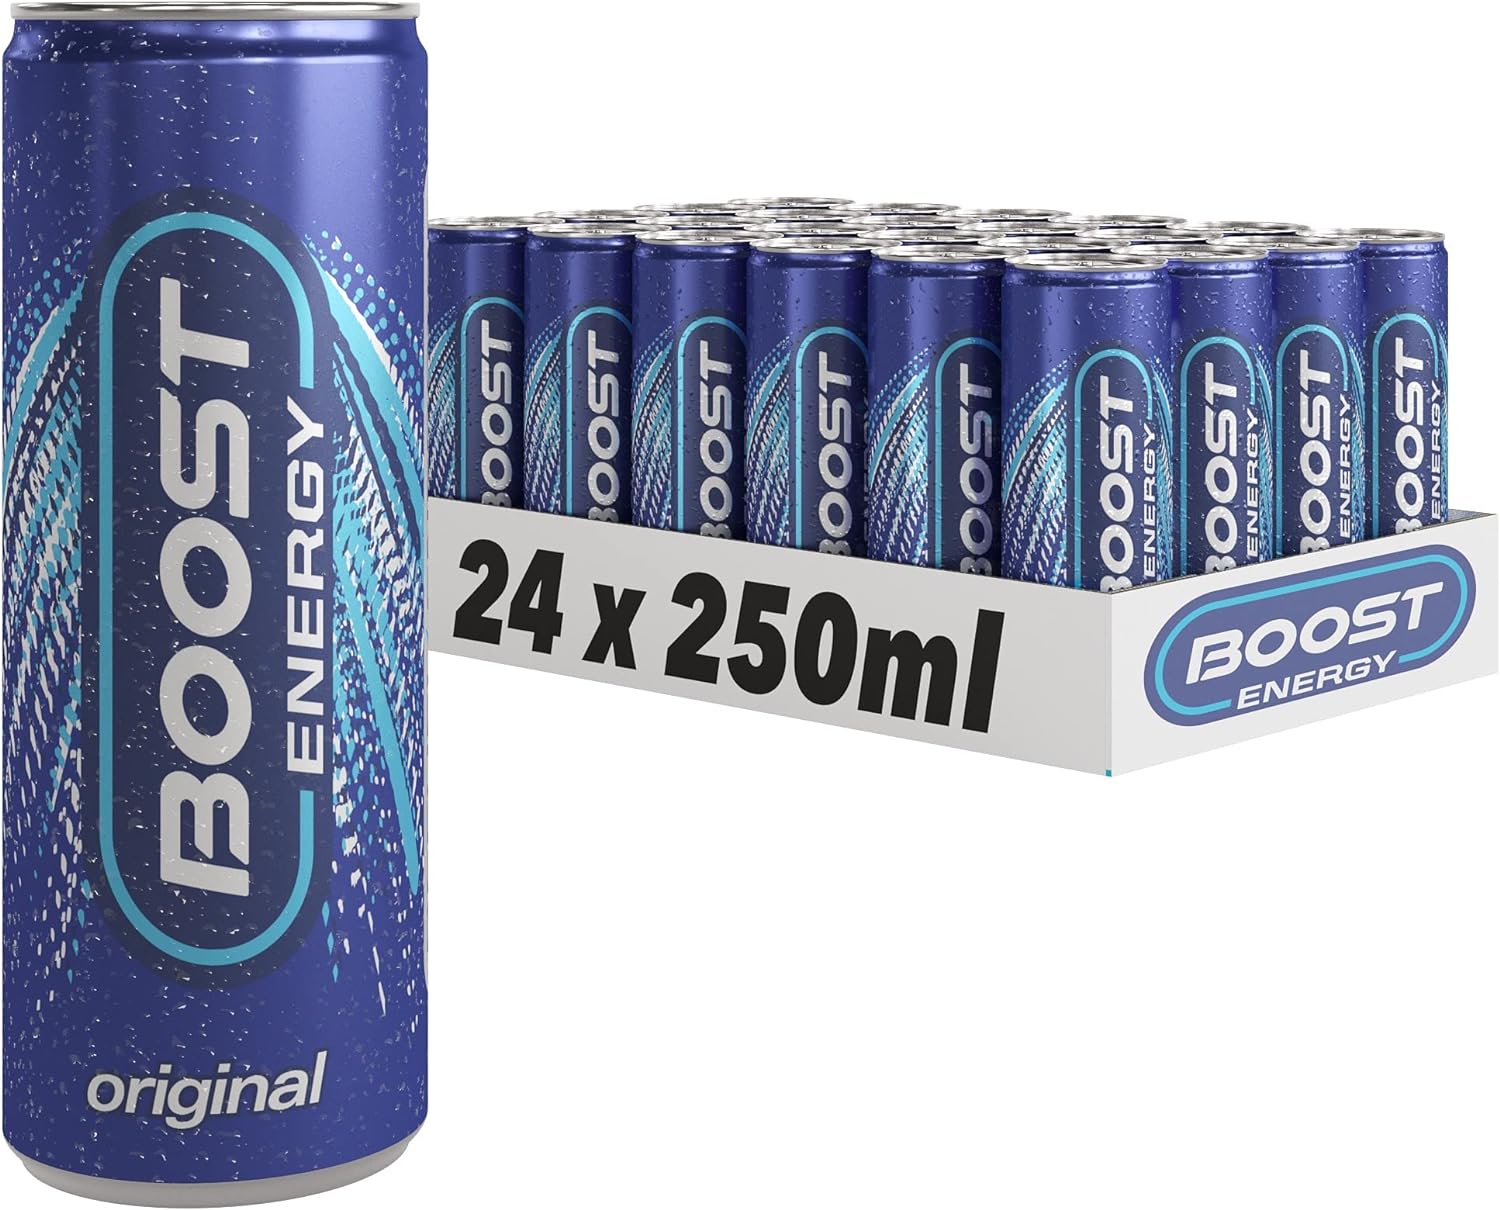 Boost Energy Drink Original - 250ml - Case of 24